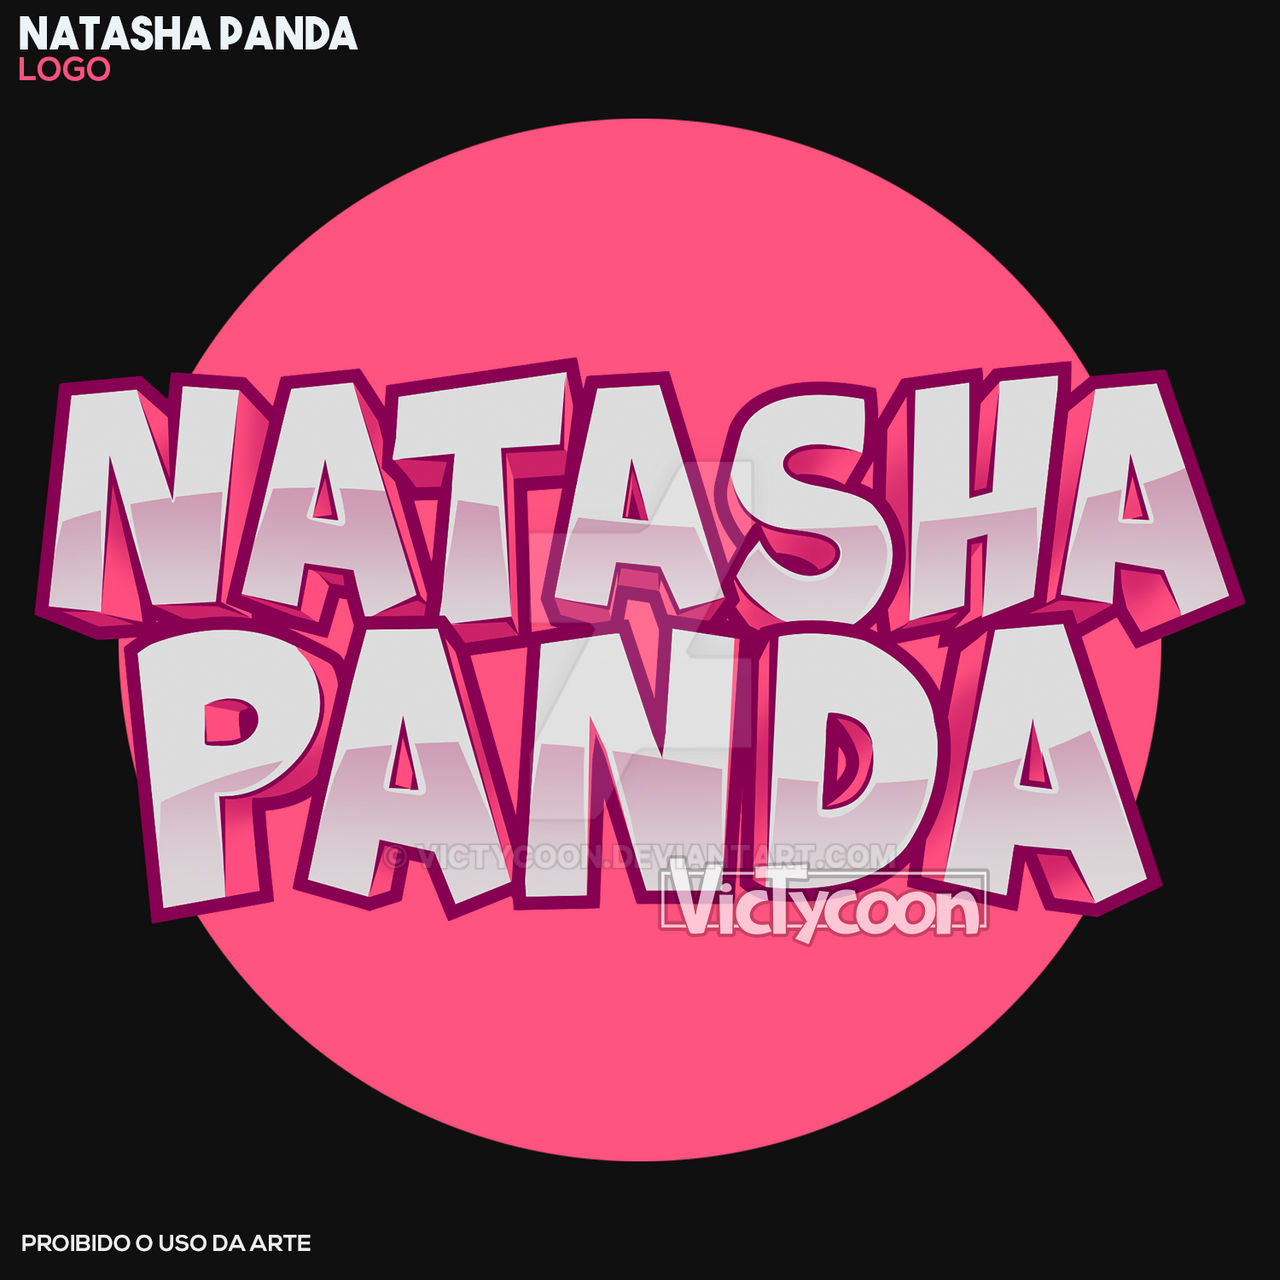 Estilo Natacha panda